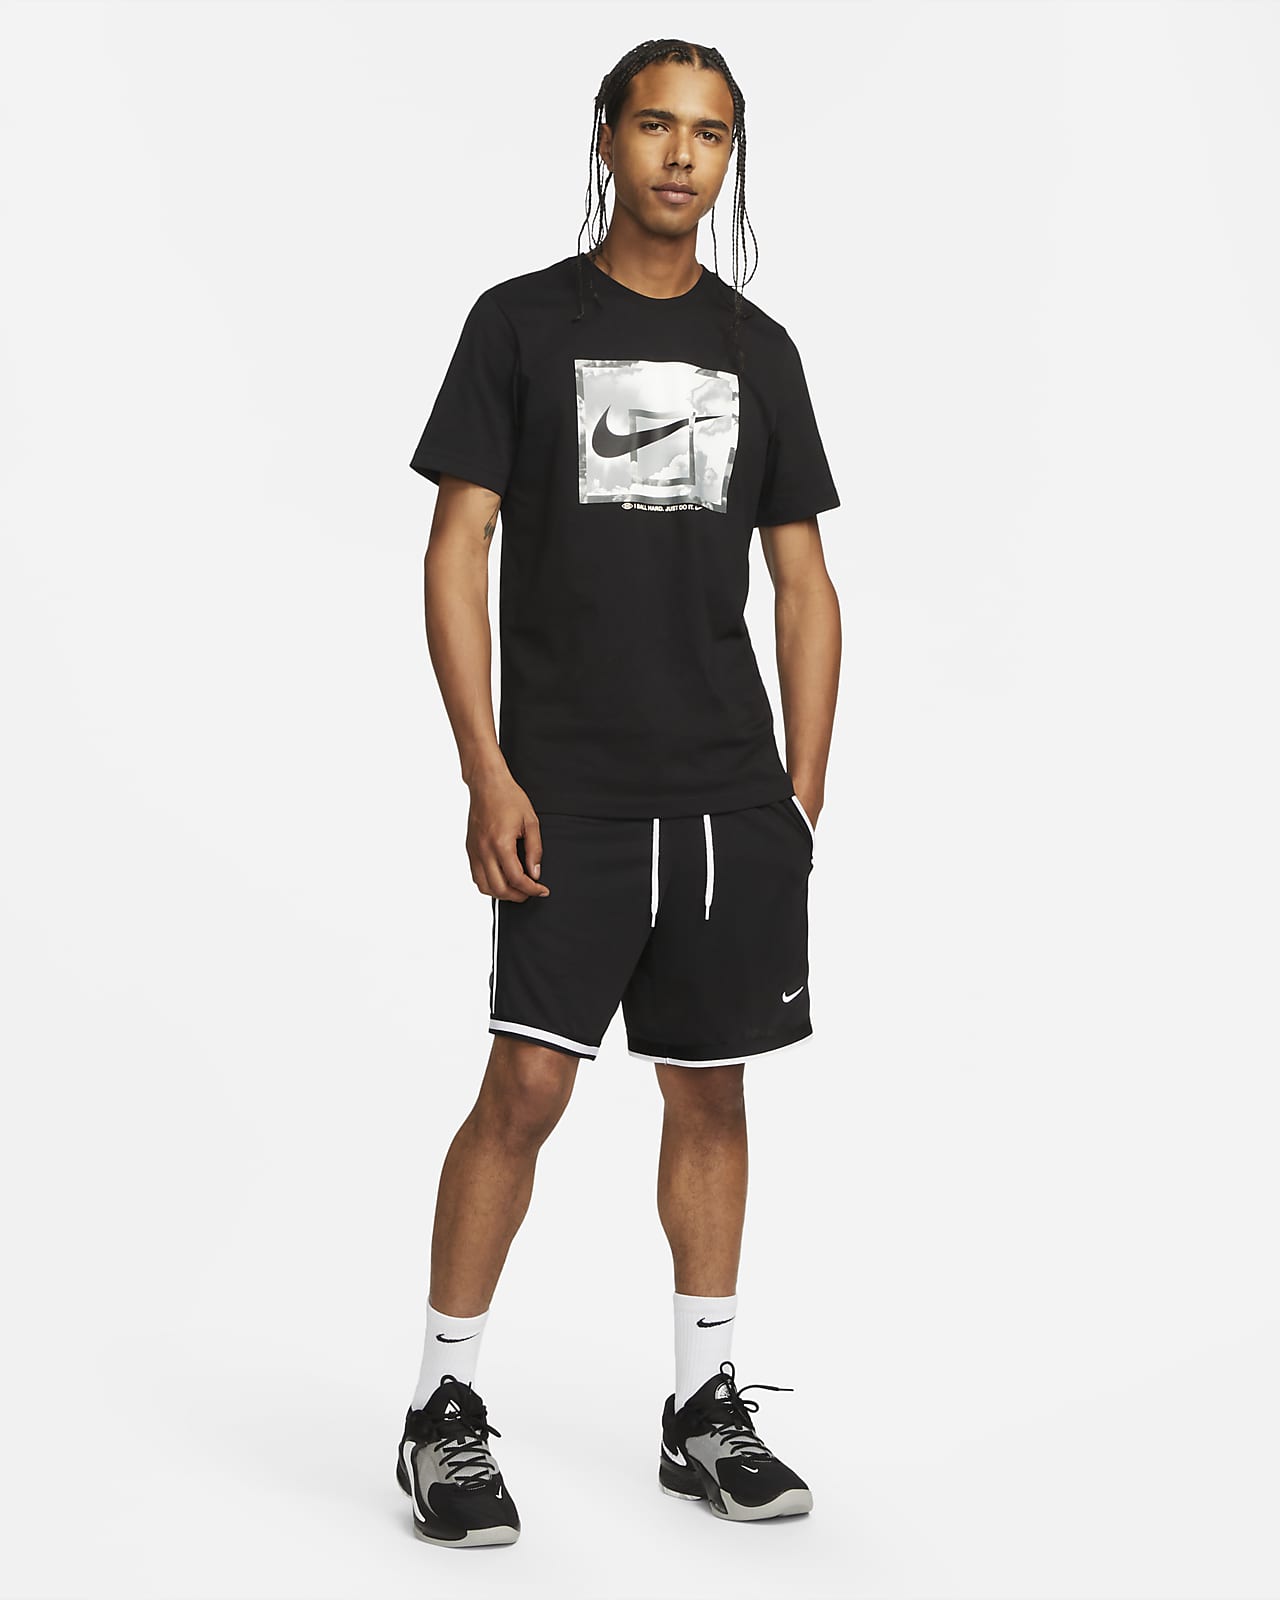 NBA Nike T-Shirts, Basketball Tees, Nike NBA Shirts 